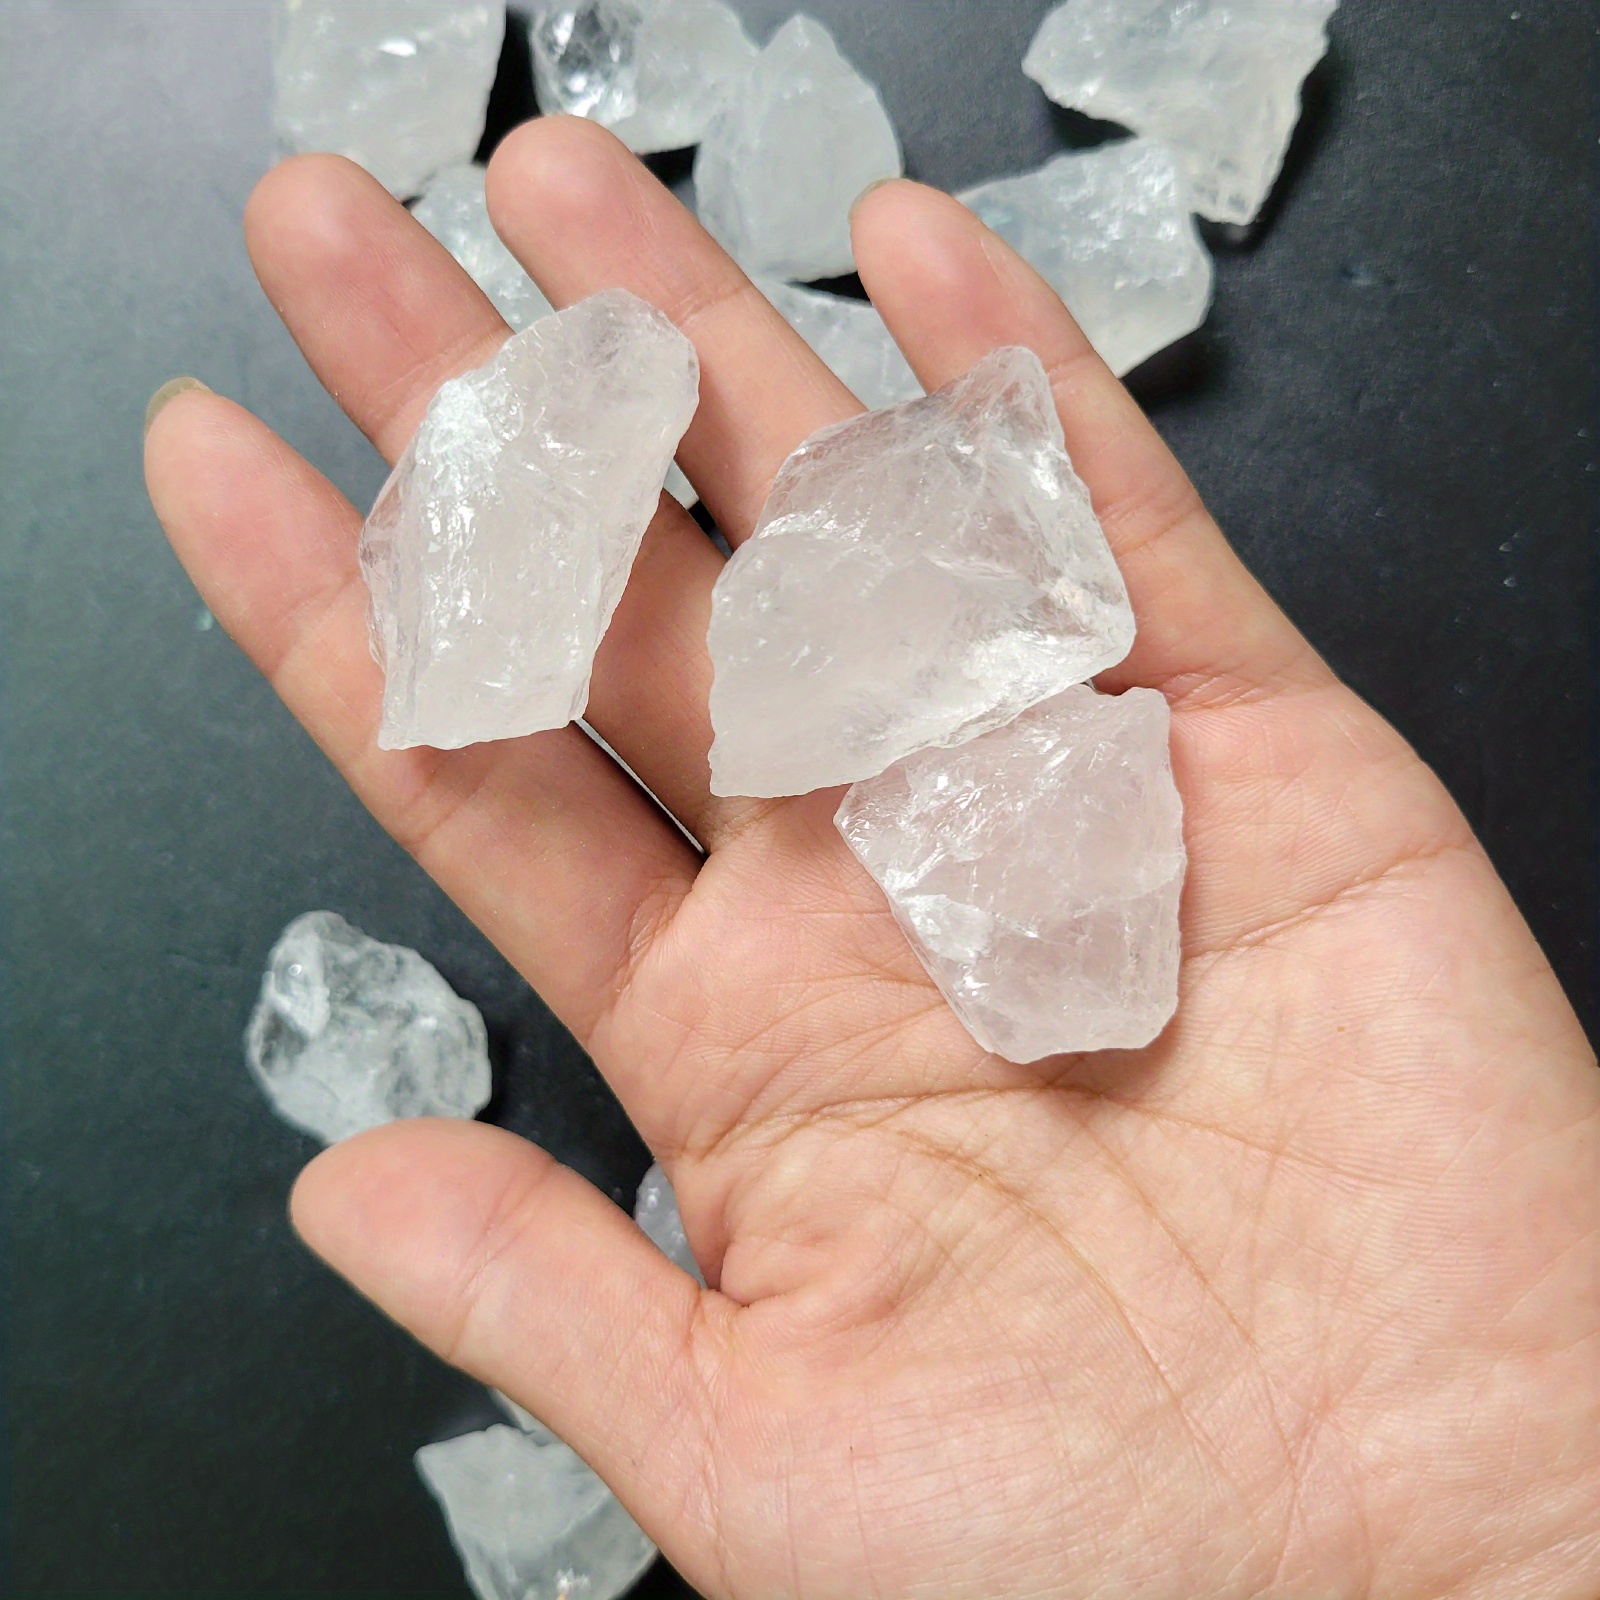  YGLINE Natural Stone Healing Crystal Rock Quartz